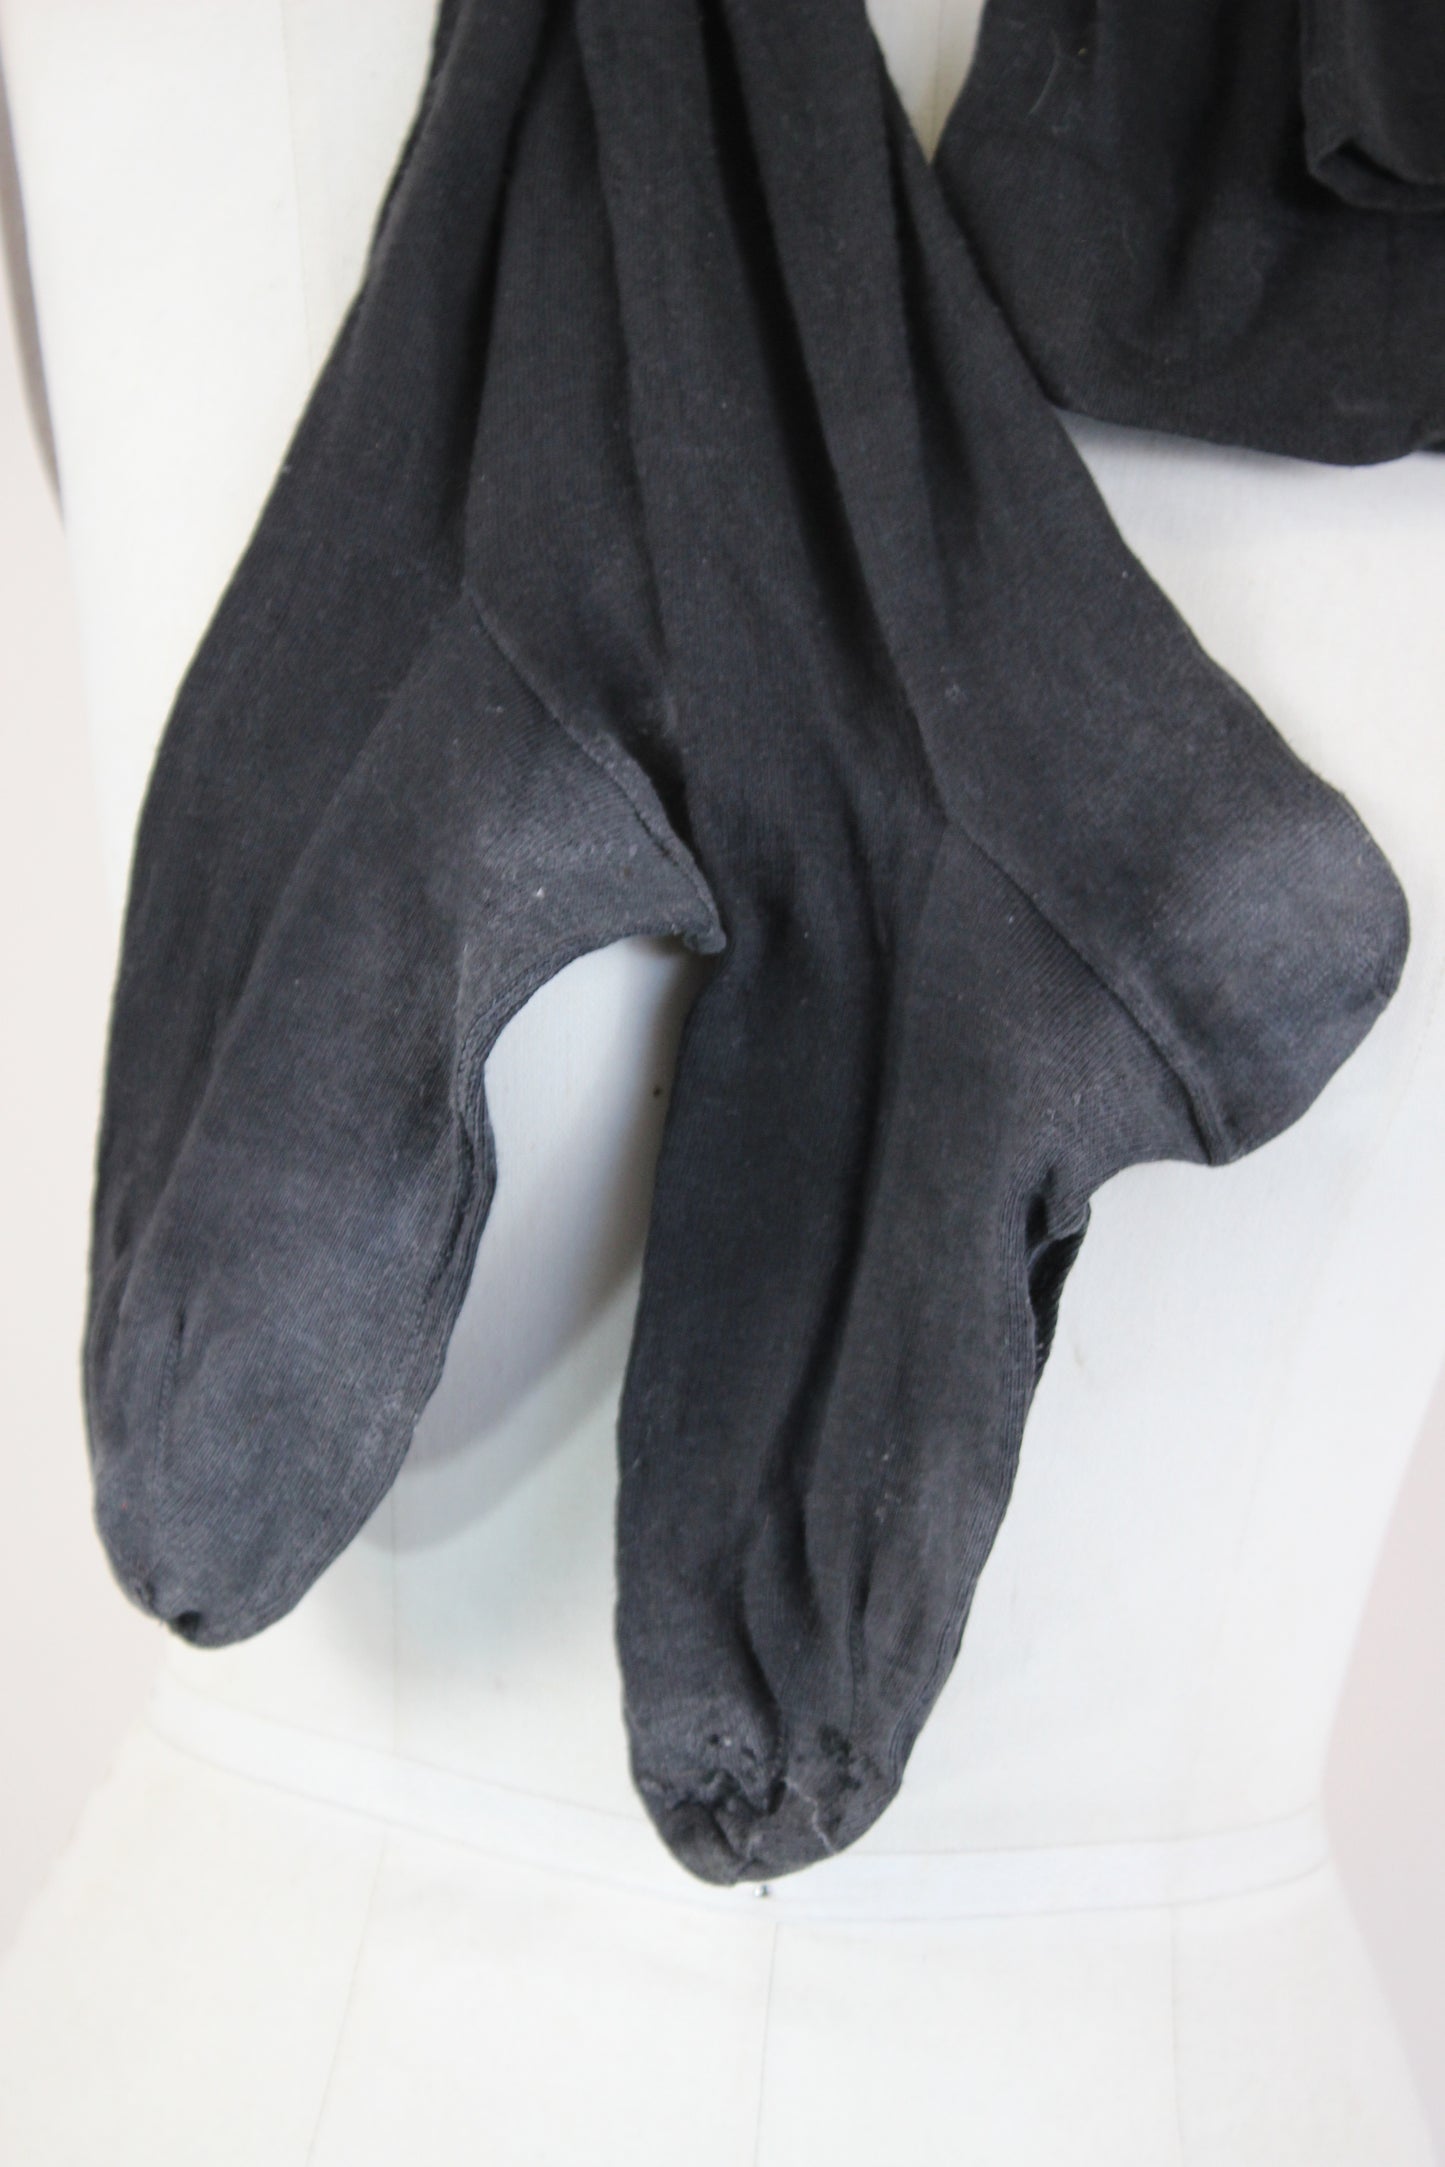 Antique Victorian Seamed Stockings Black Cotton